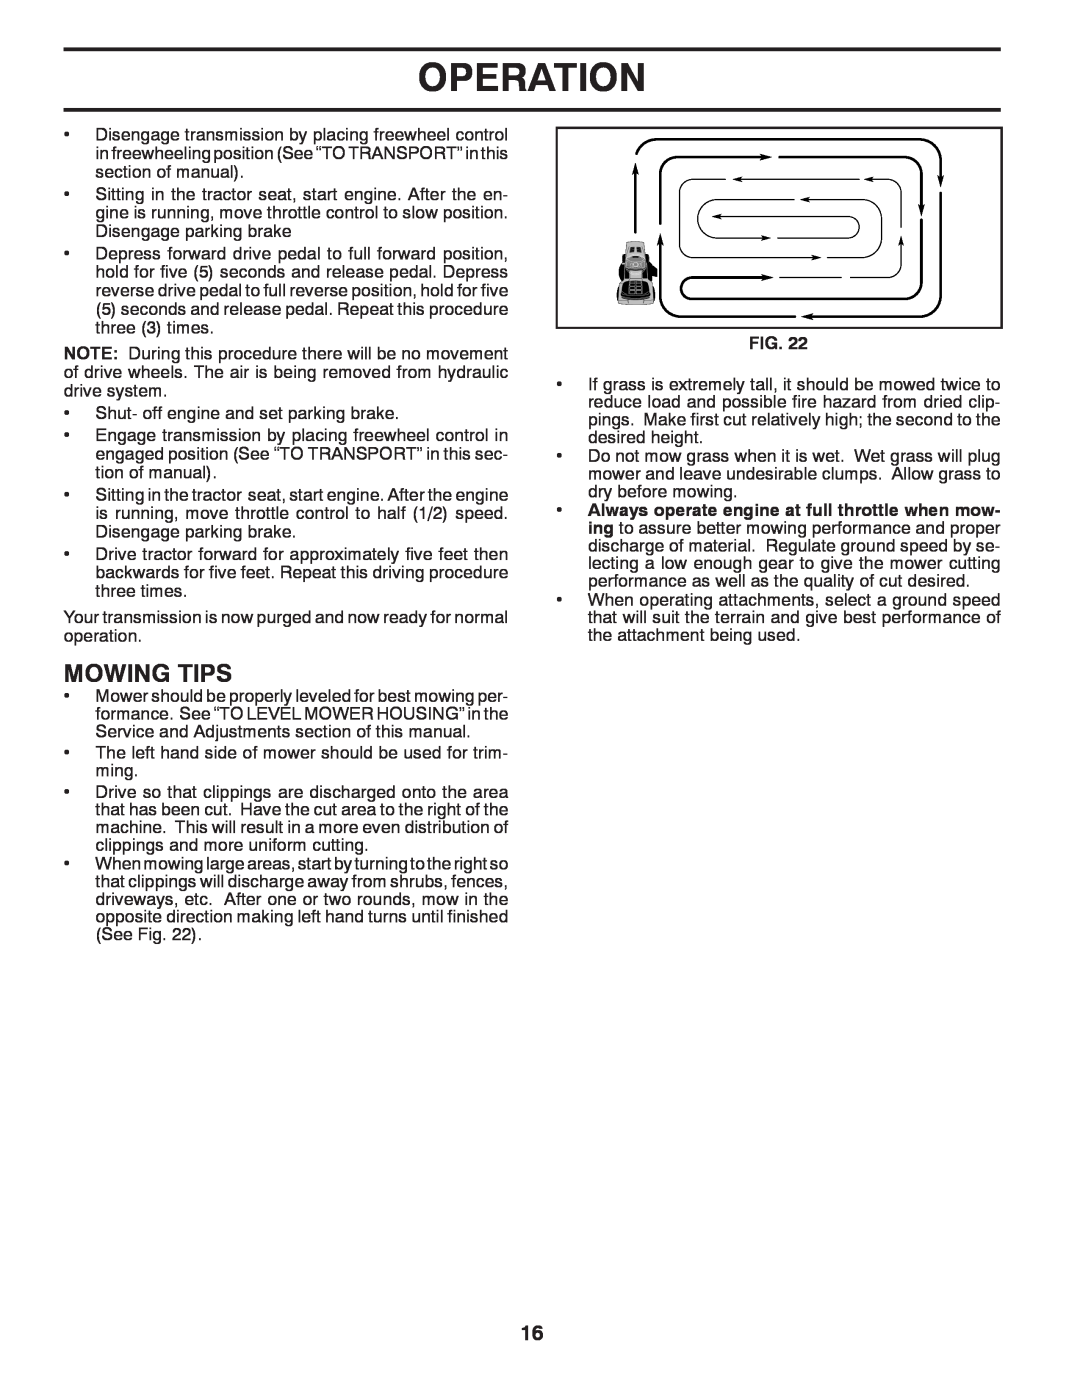 Poulan 423349 manual Mowing Tips, Operation 